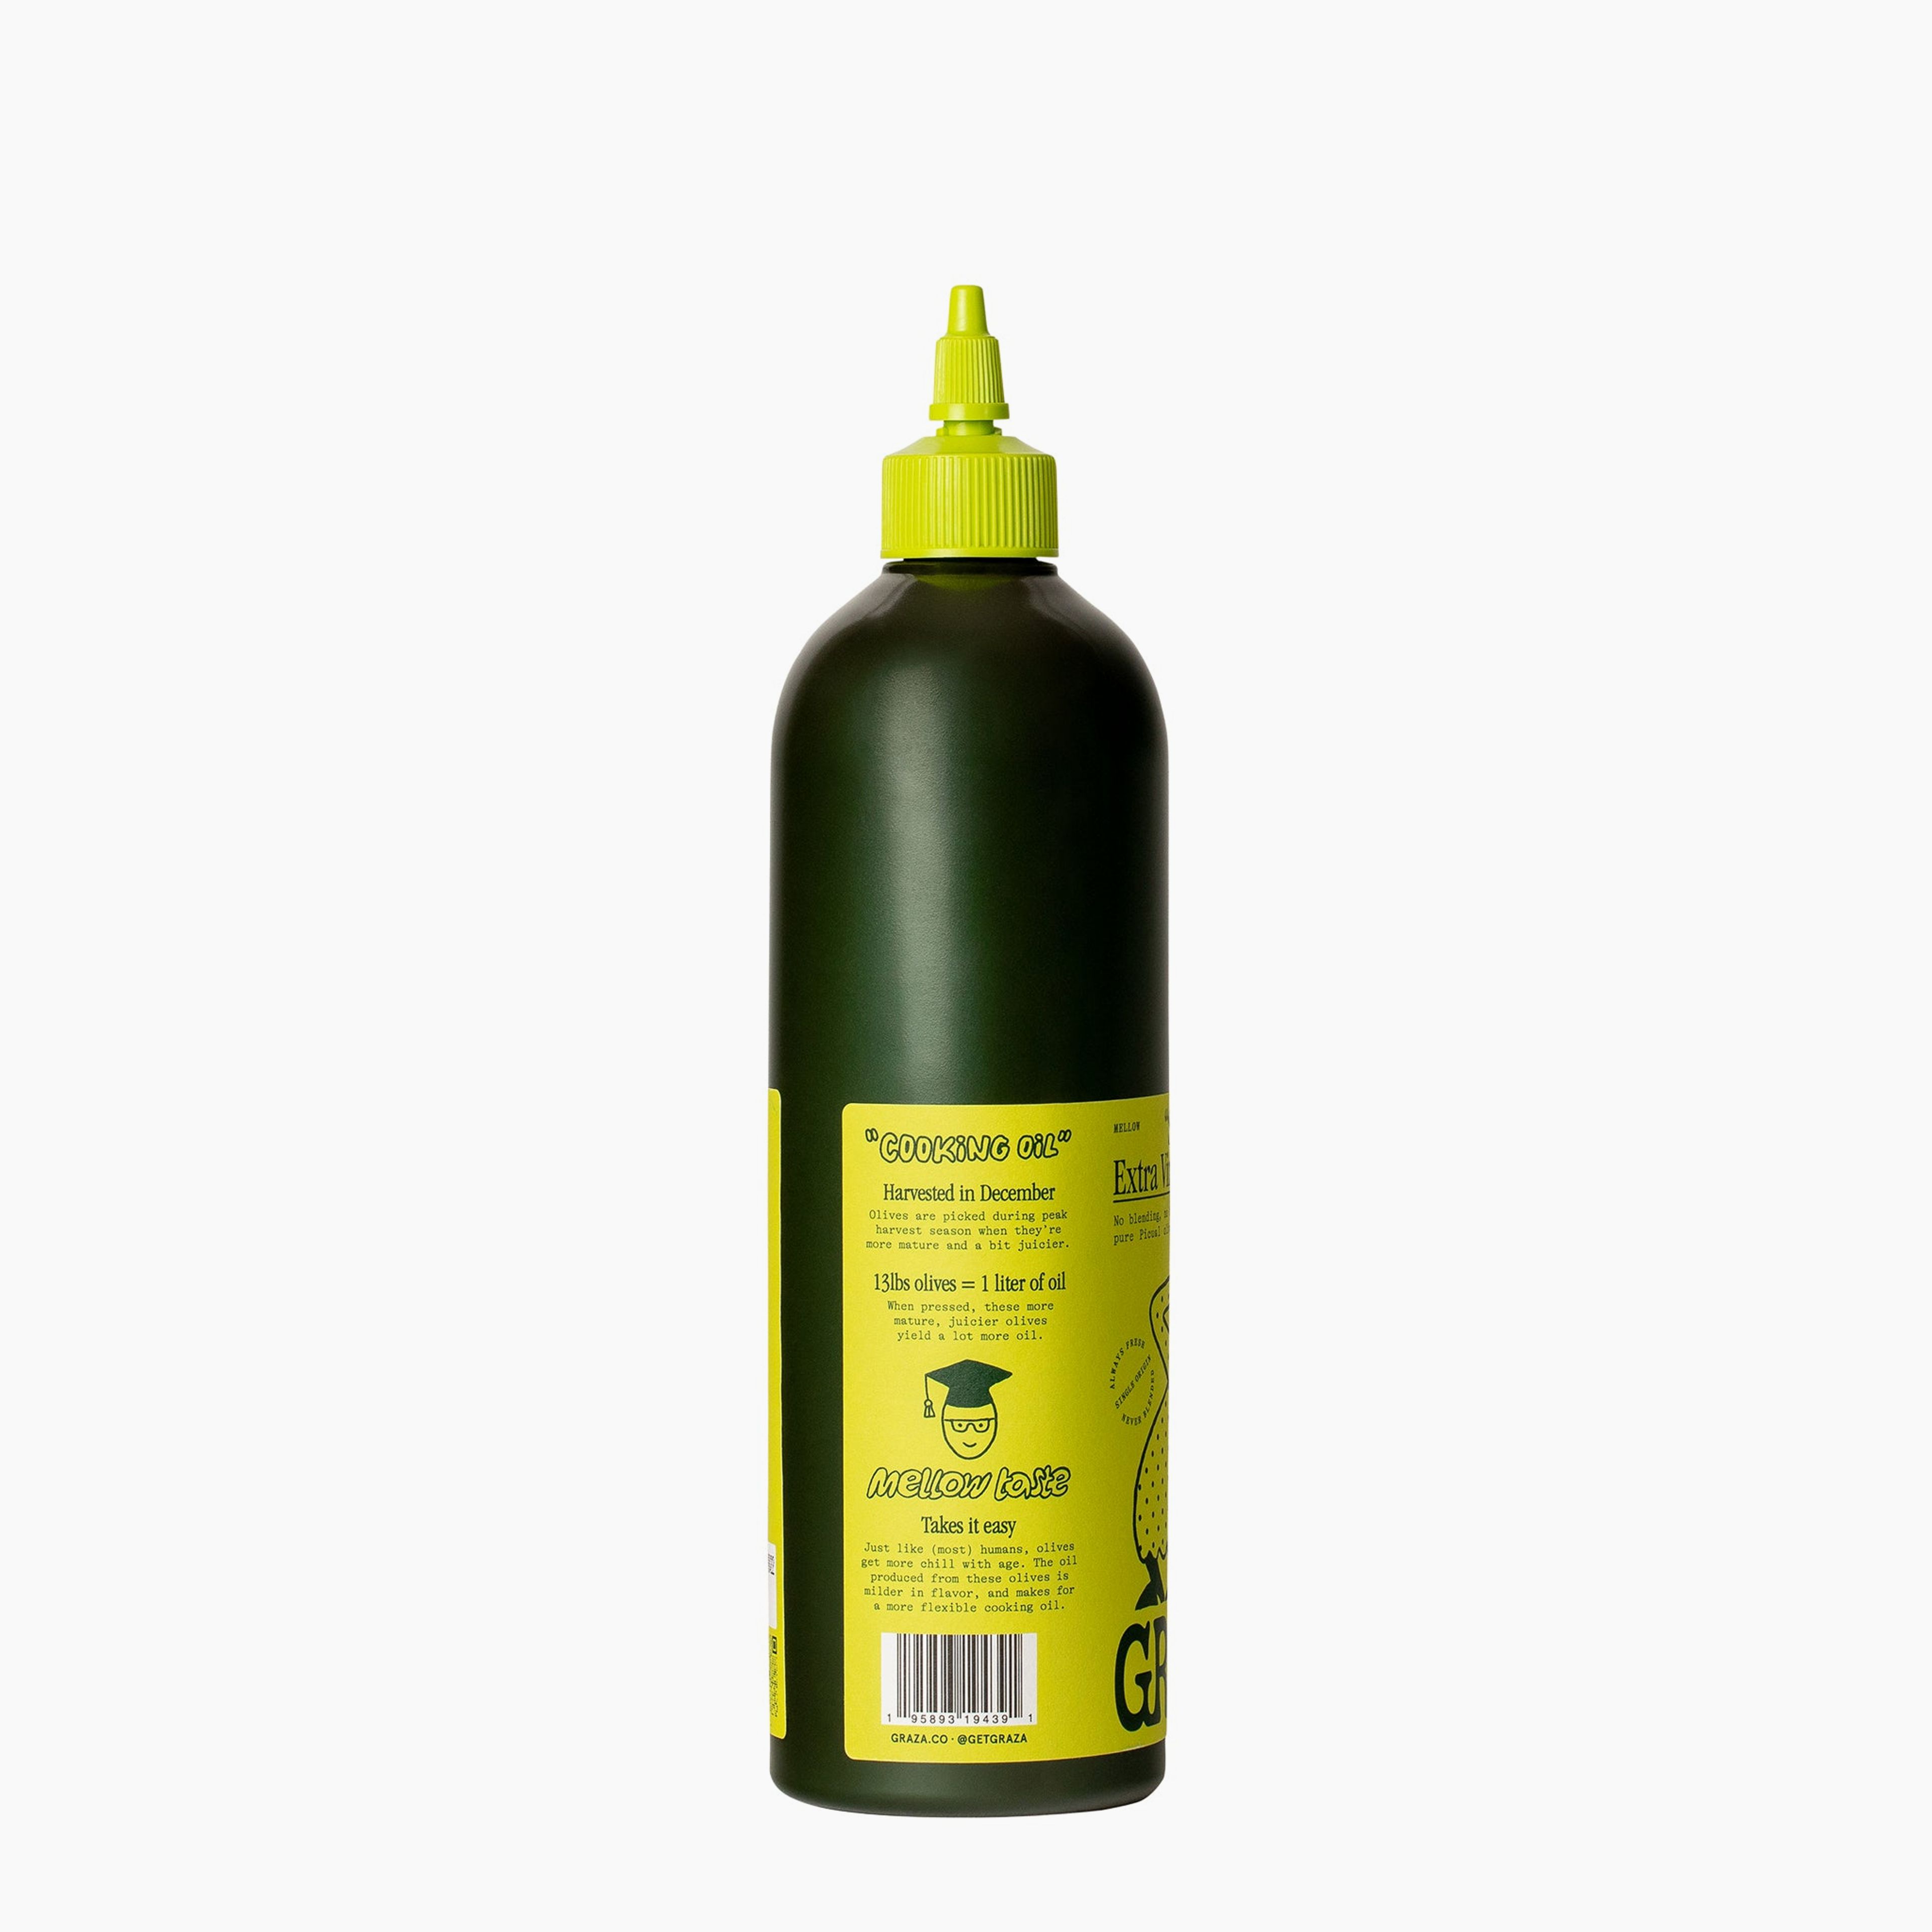 Graza Extra Virgin Olive Oil - Sizzle (750ml)